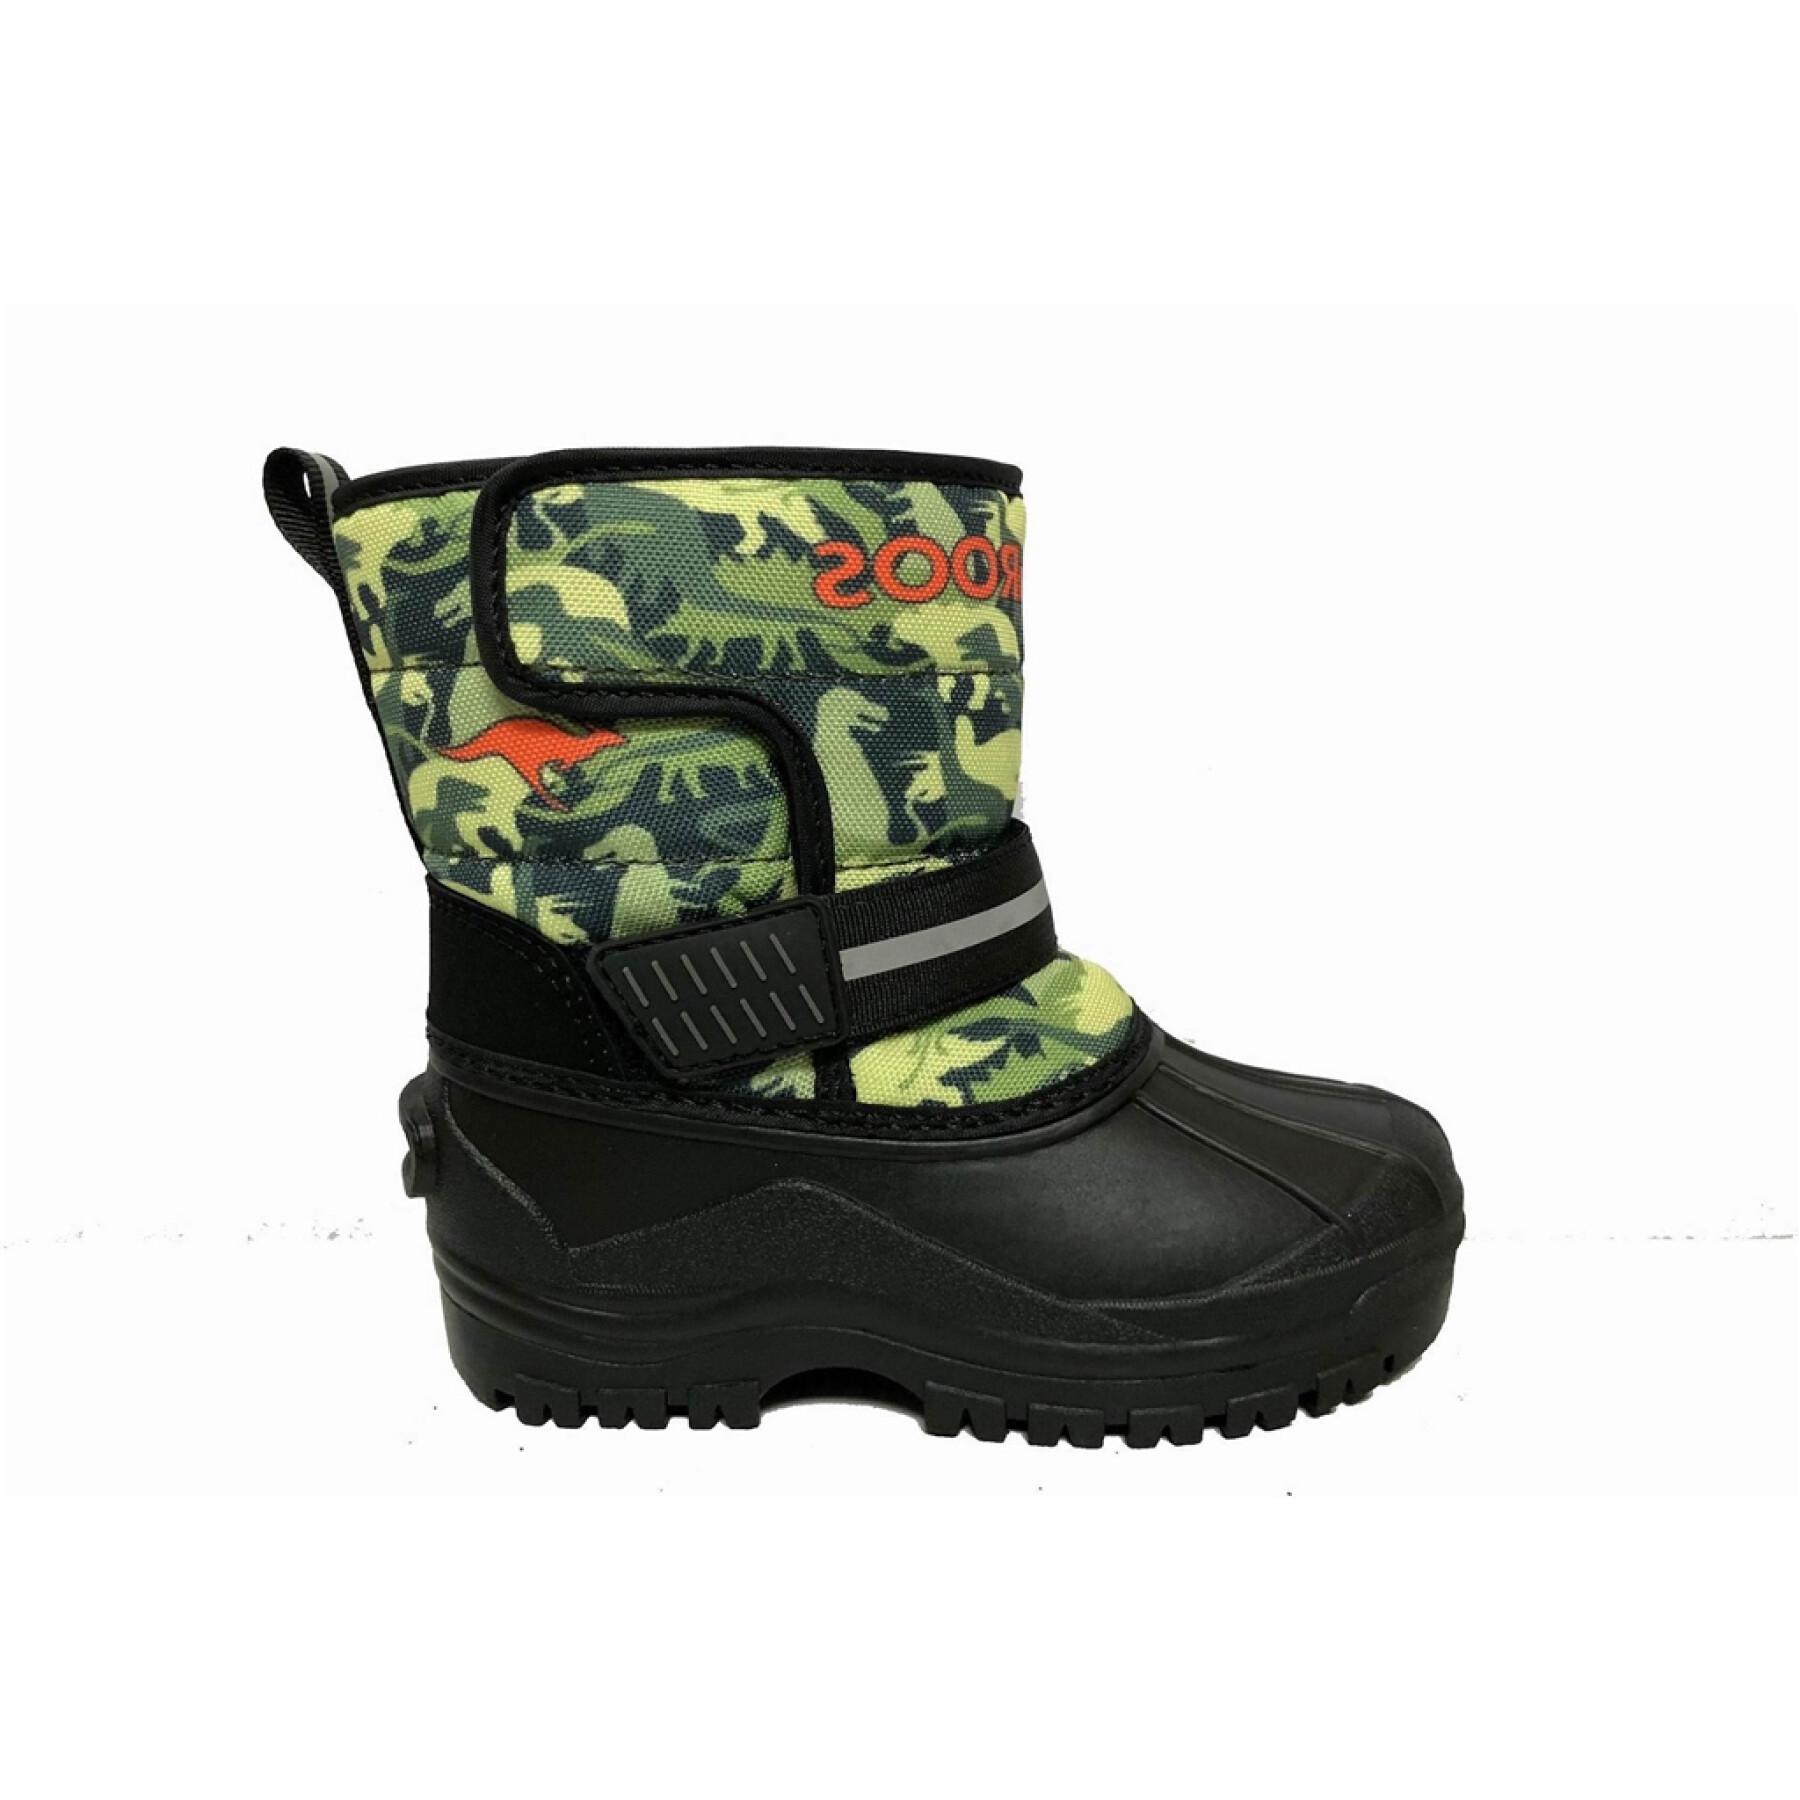 baas sector maniac Children's boots KangaROOS K-Shell - KangaROOS - Boots - Shoes